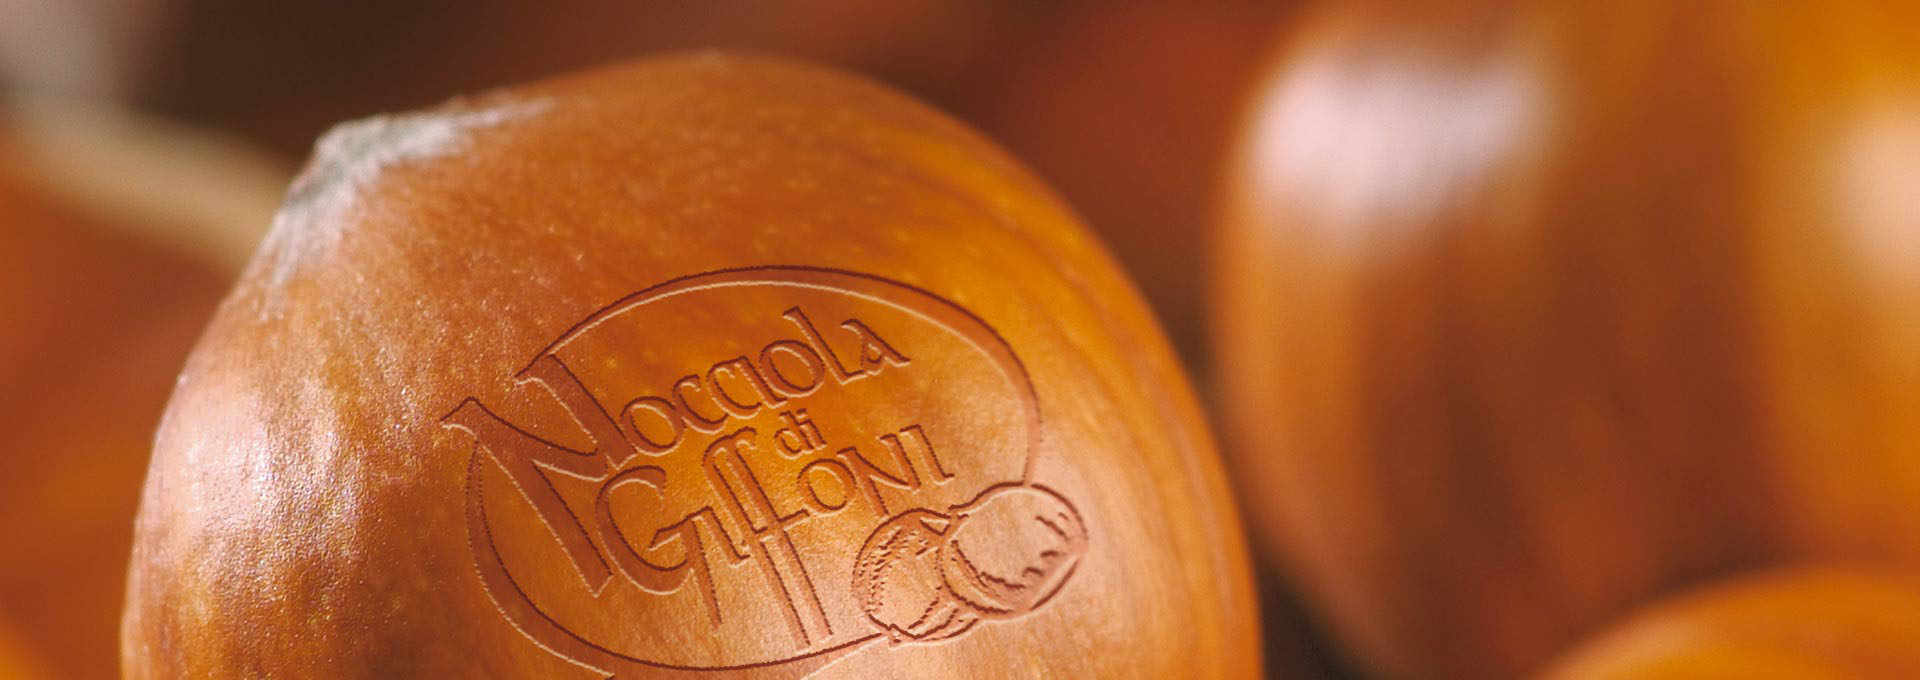 The Giffoni Hazelnut, the quintessence of flavour